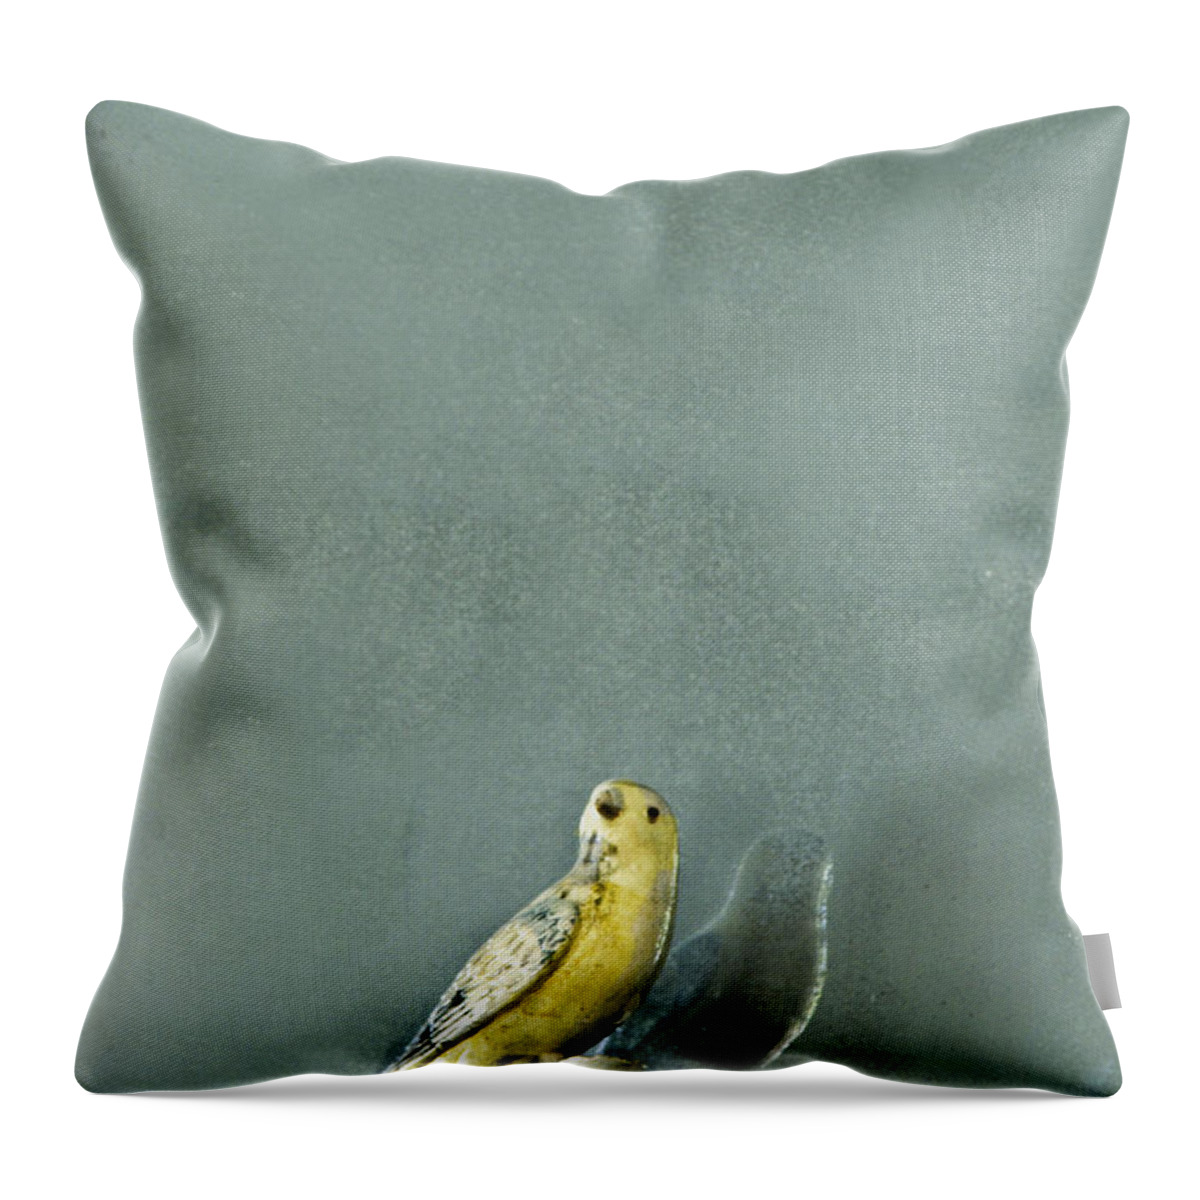 Bird Throw Pillow featuring the photograph Bird by Margie Hurwich